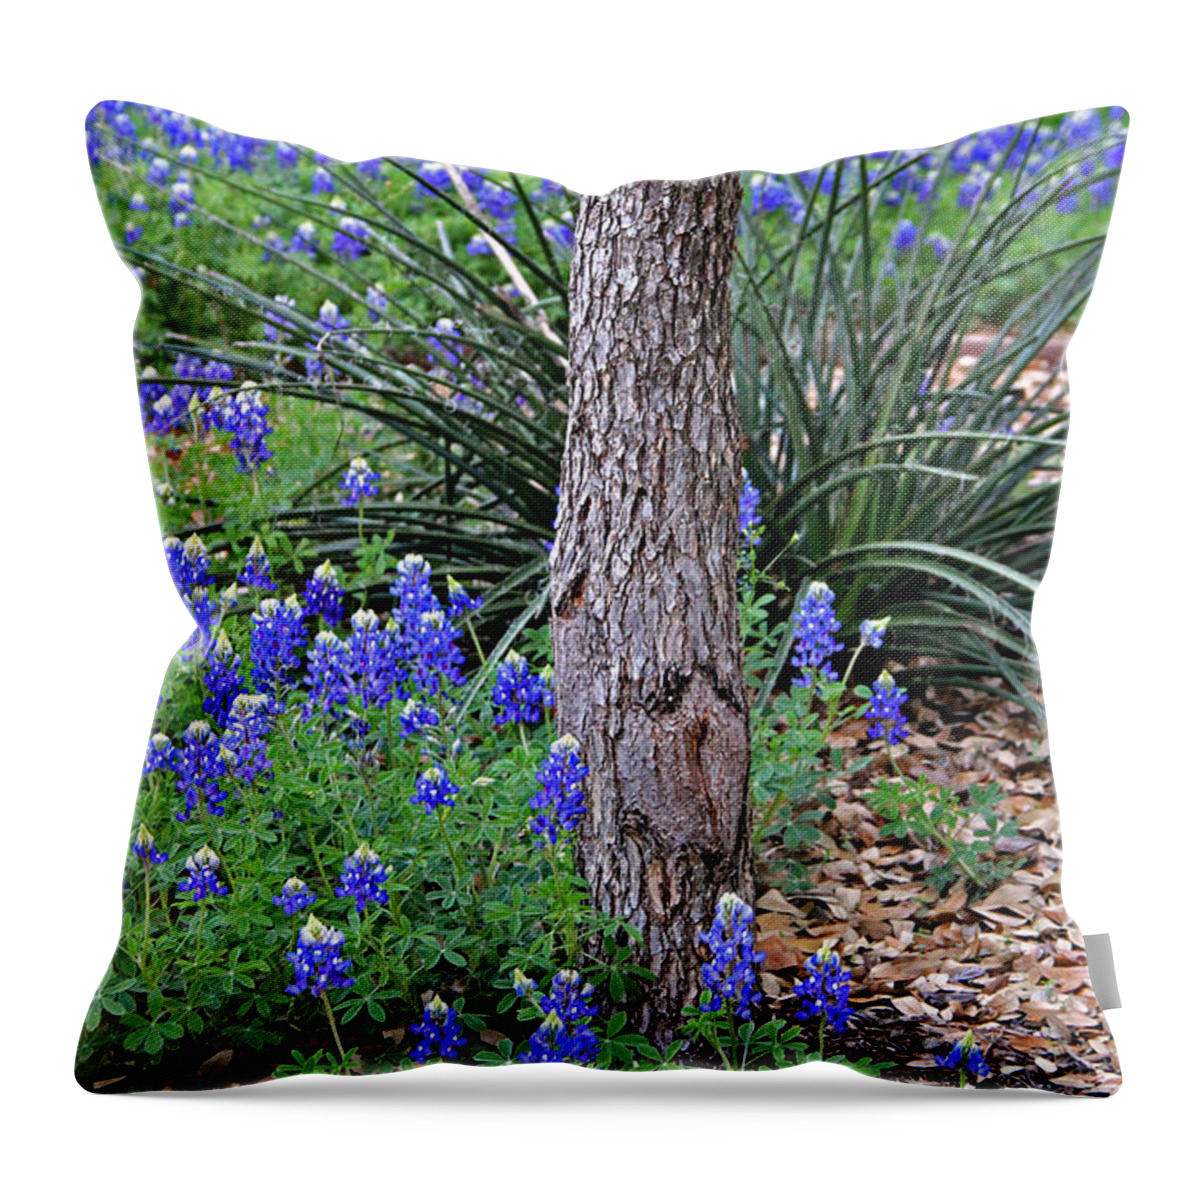 Landscape Throw Pillow featuring the photograph Texas Bluebonnets by Matalyn Gardner